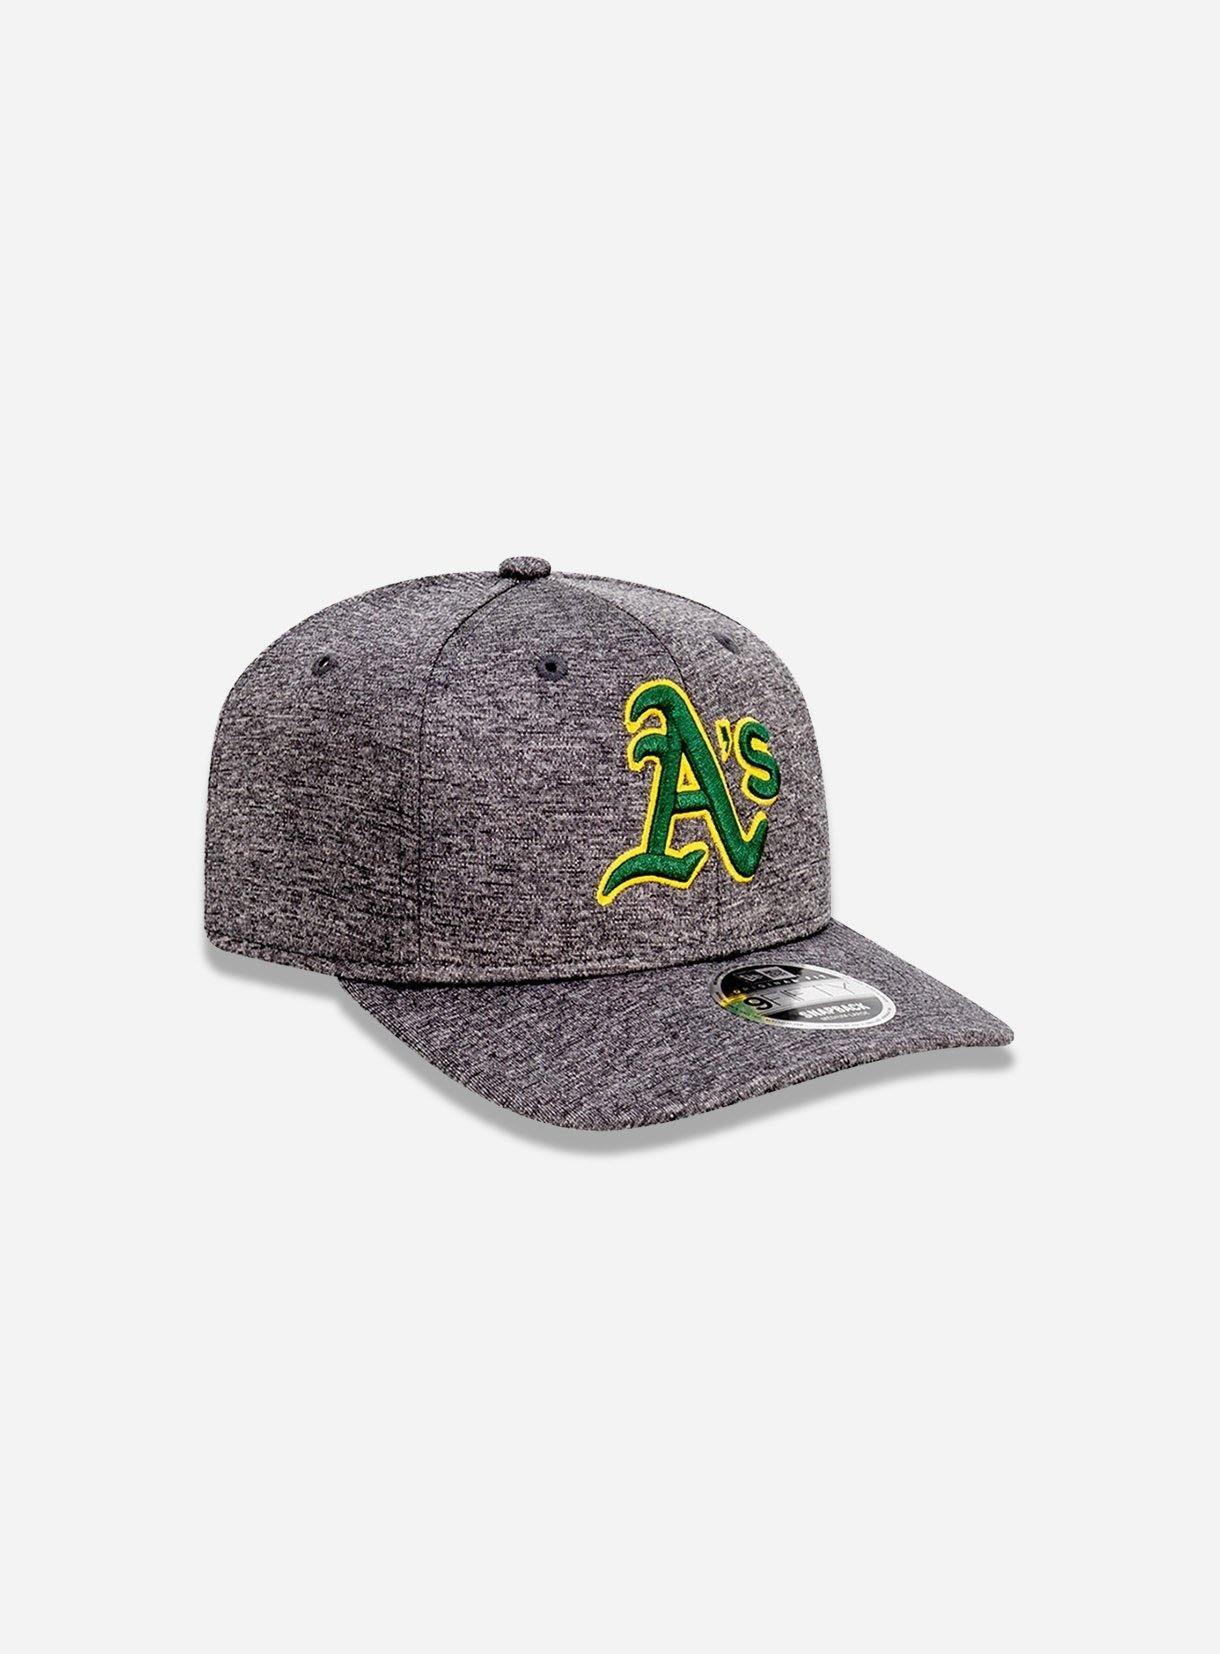 New Era Oakland Athletics 9Fifty Snapback - Challenger Streetwear